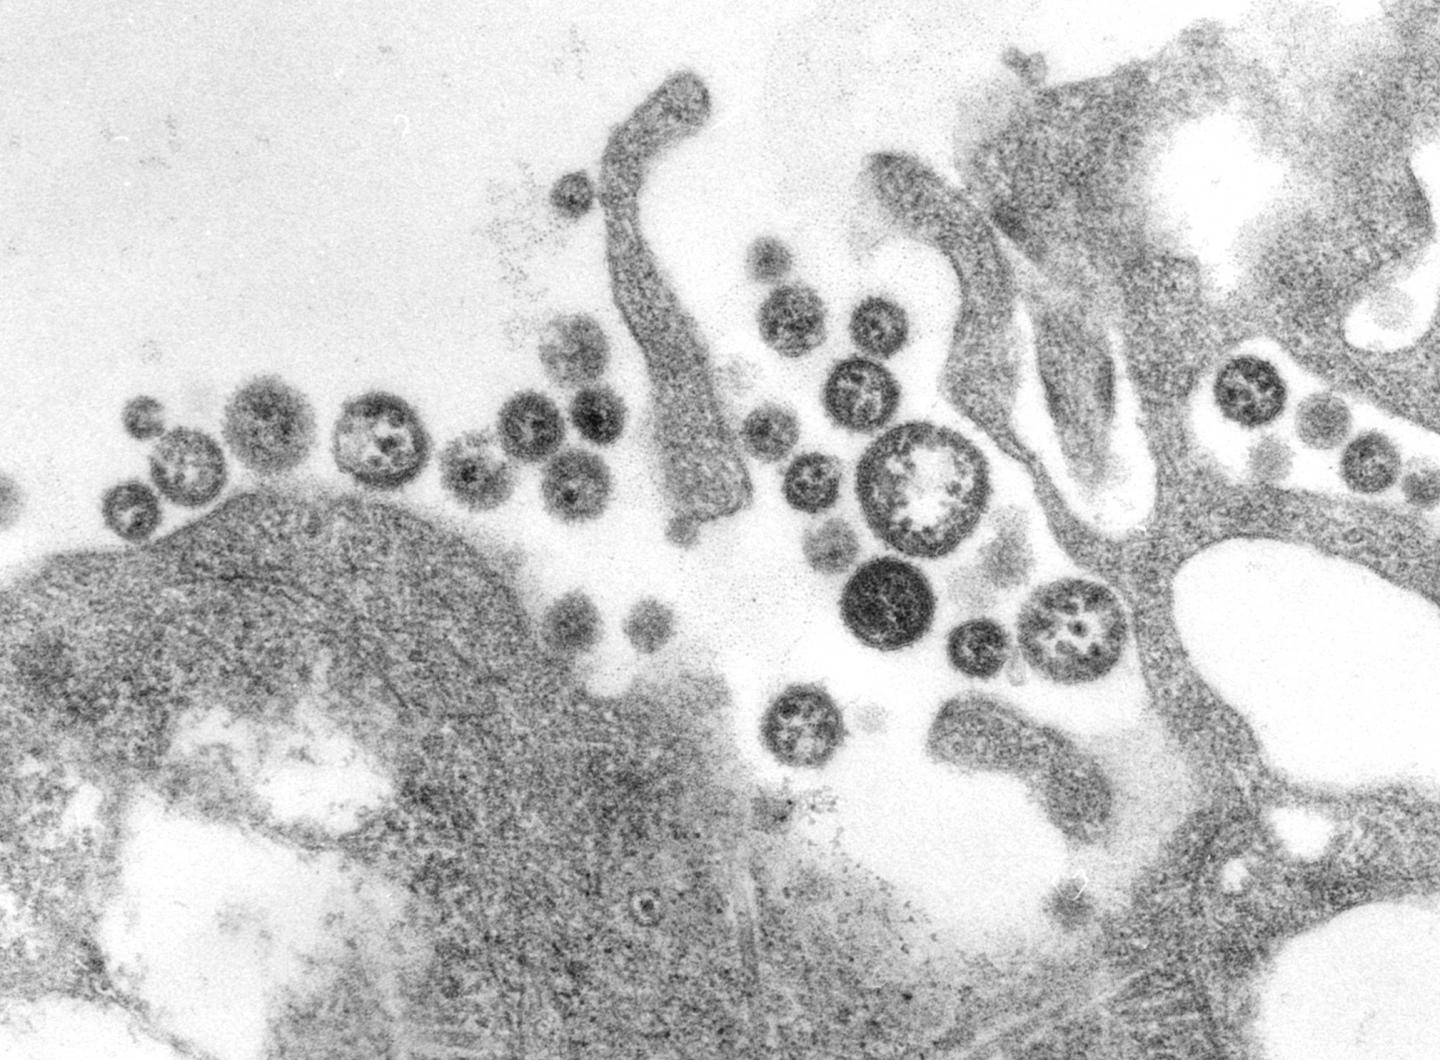 Transmission Electron Microscopic Image of Lassa Virus